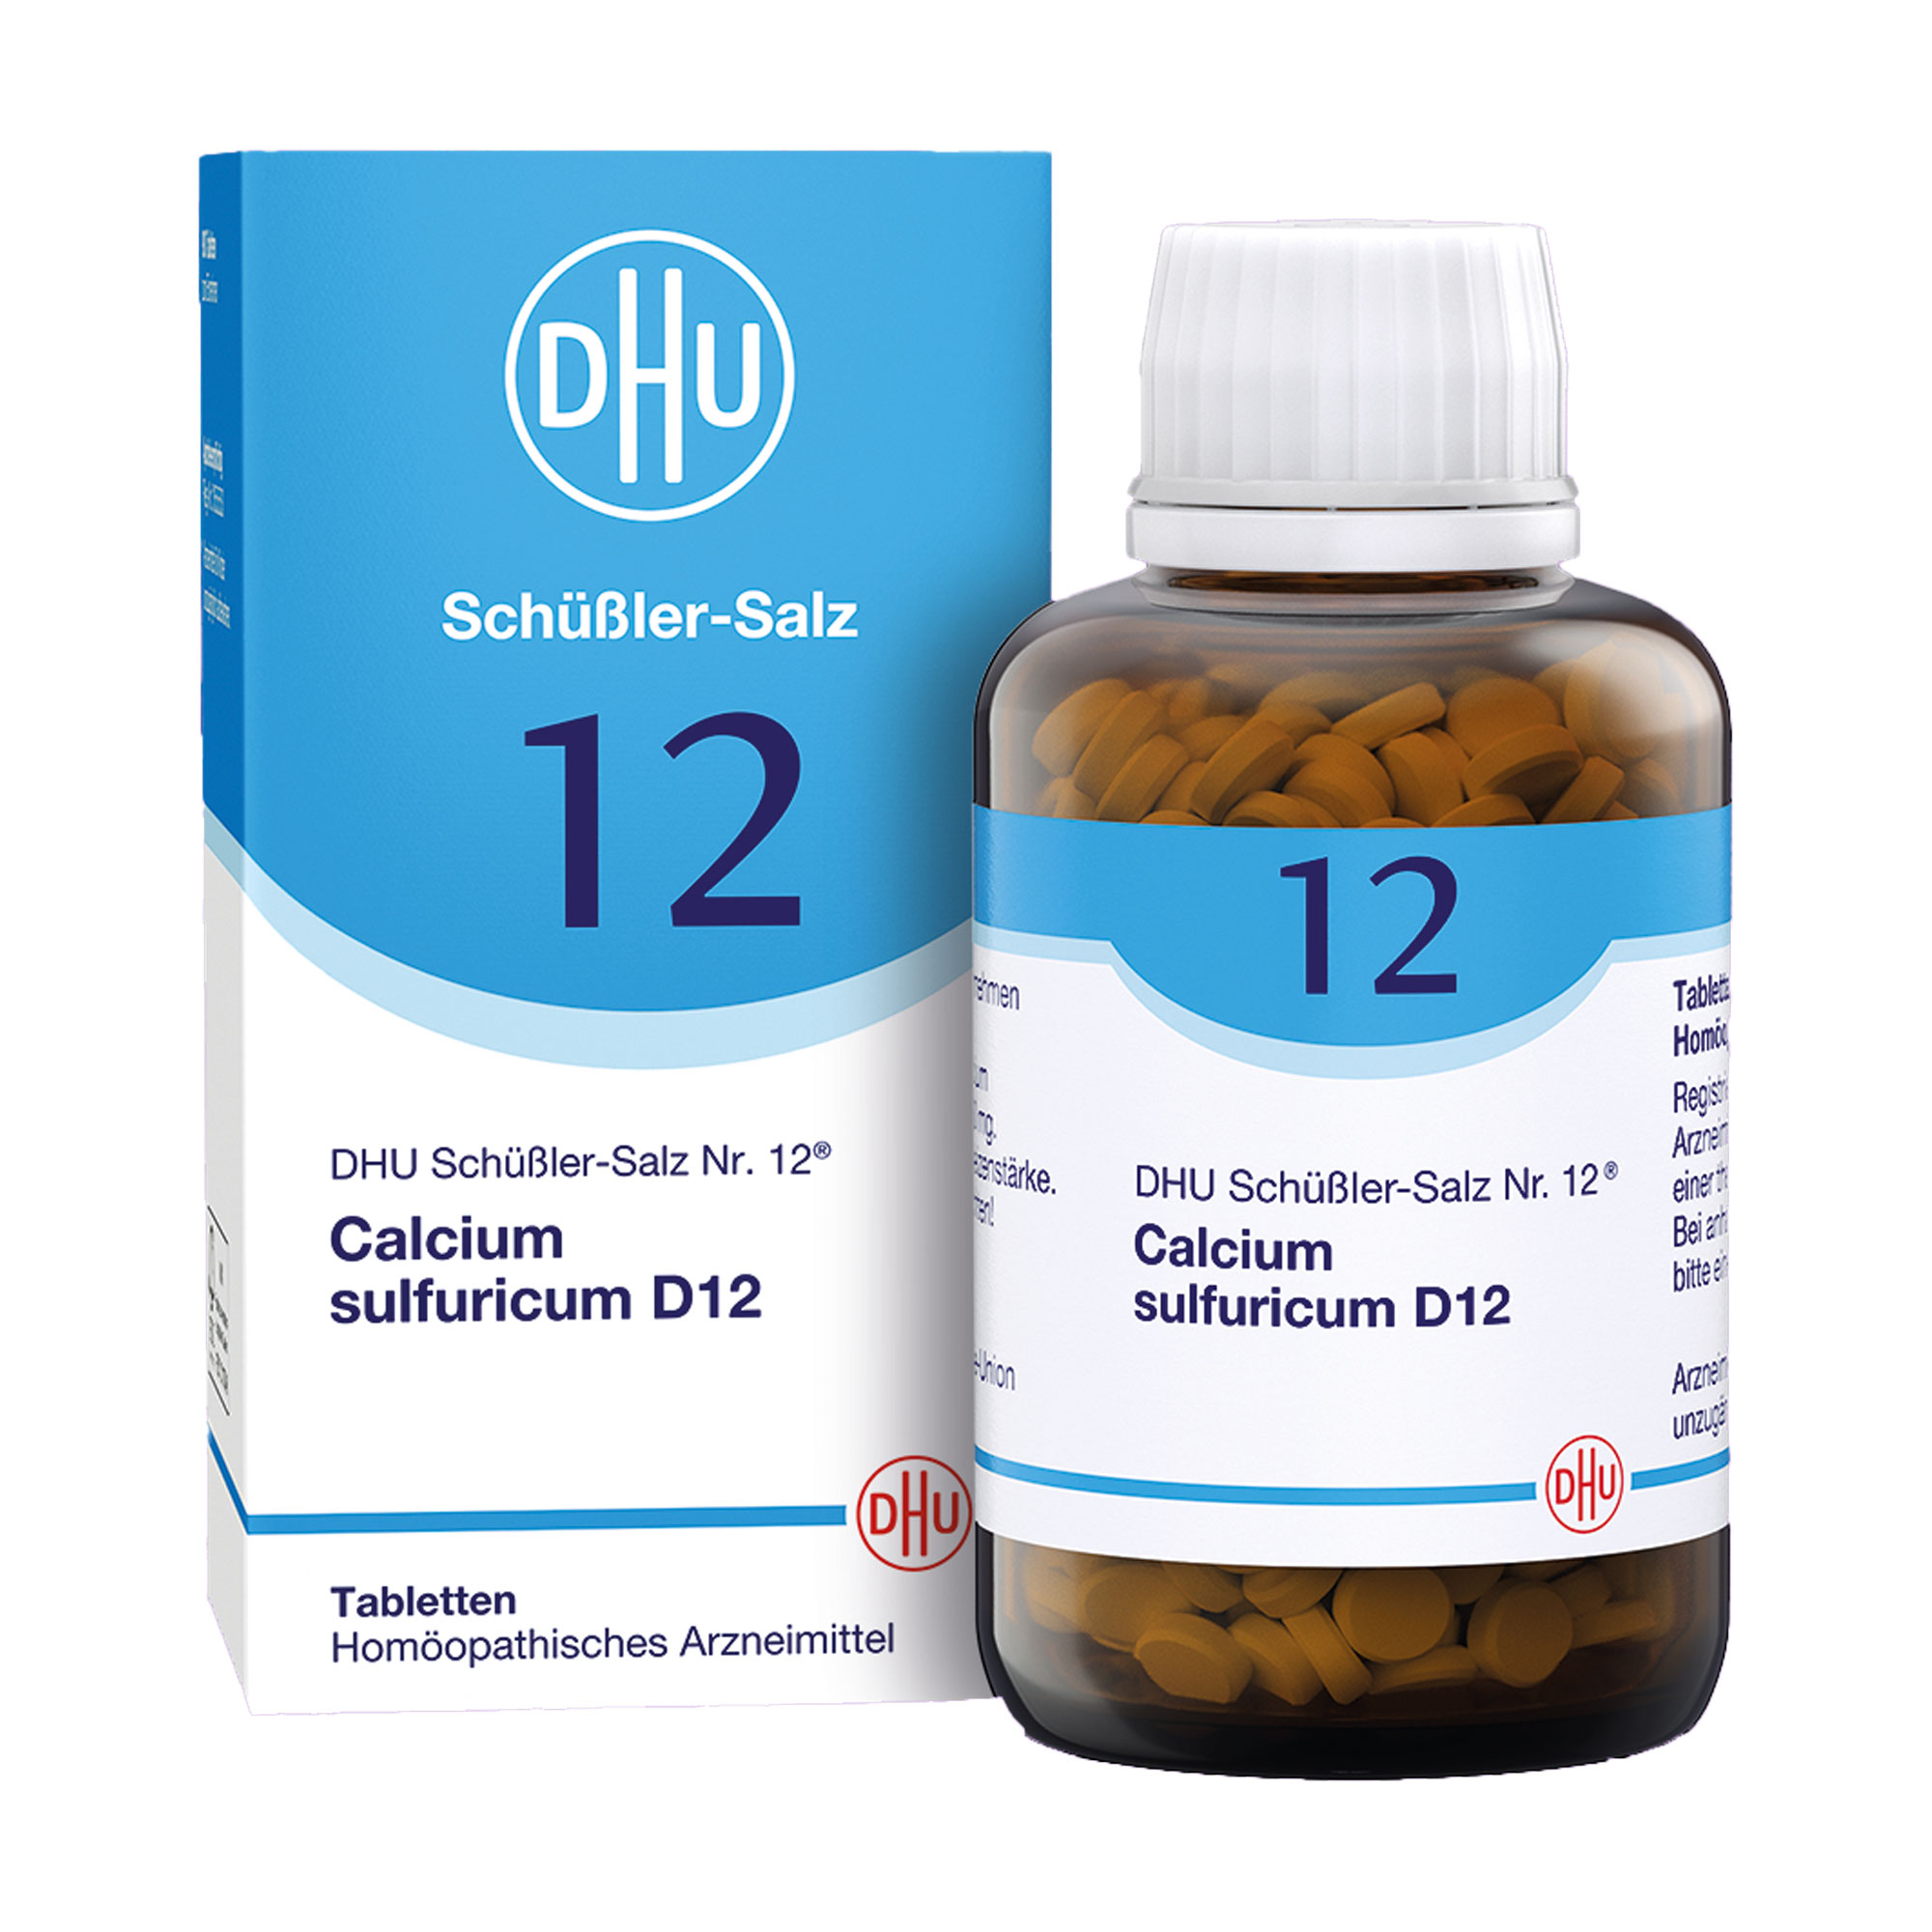 Homöopathisches Arzneimittel mit Calcium sulfuricum Trit. D12.